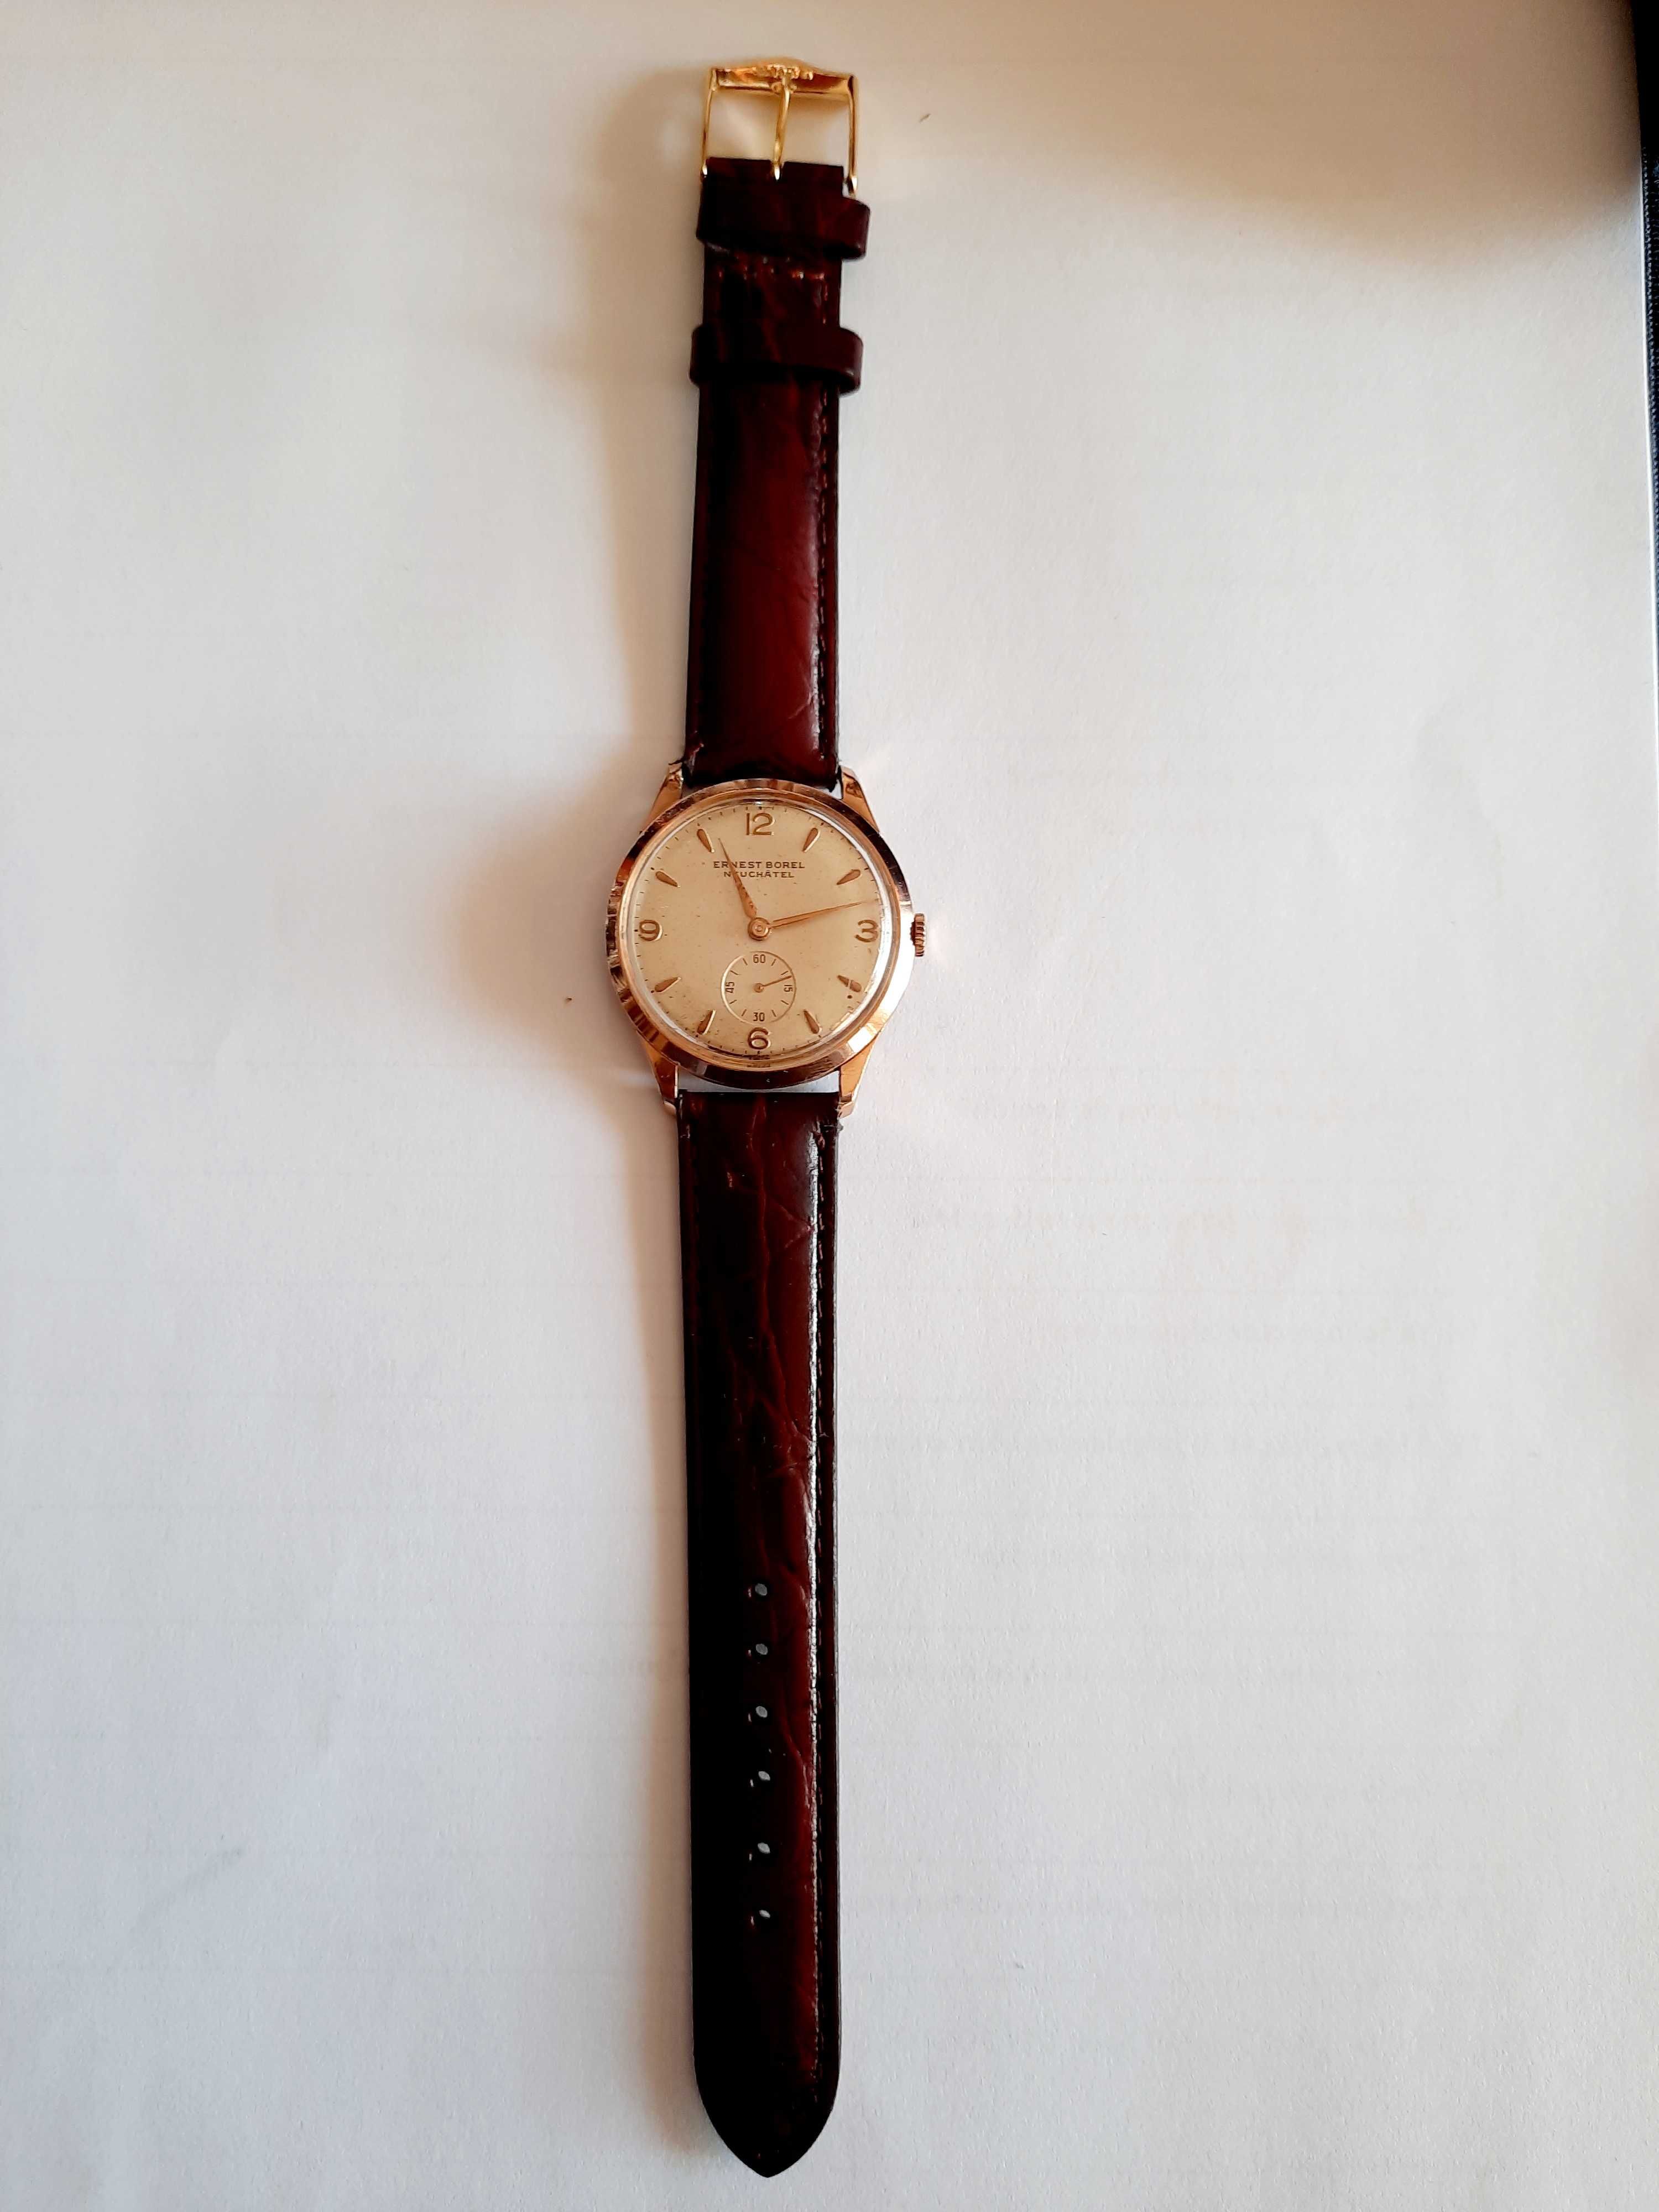 Relógio "Ernest Borel" anos 60-70, plaquet d'or